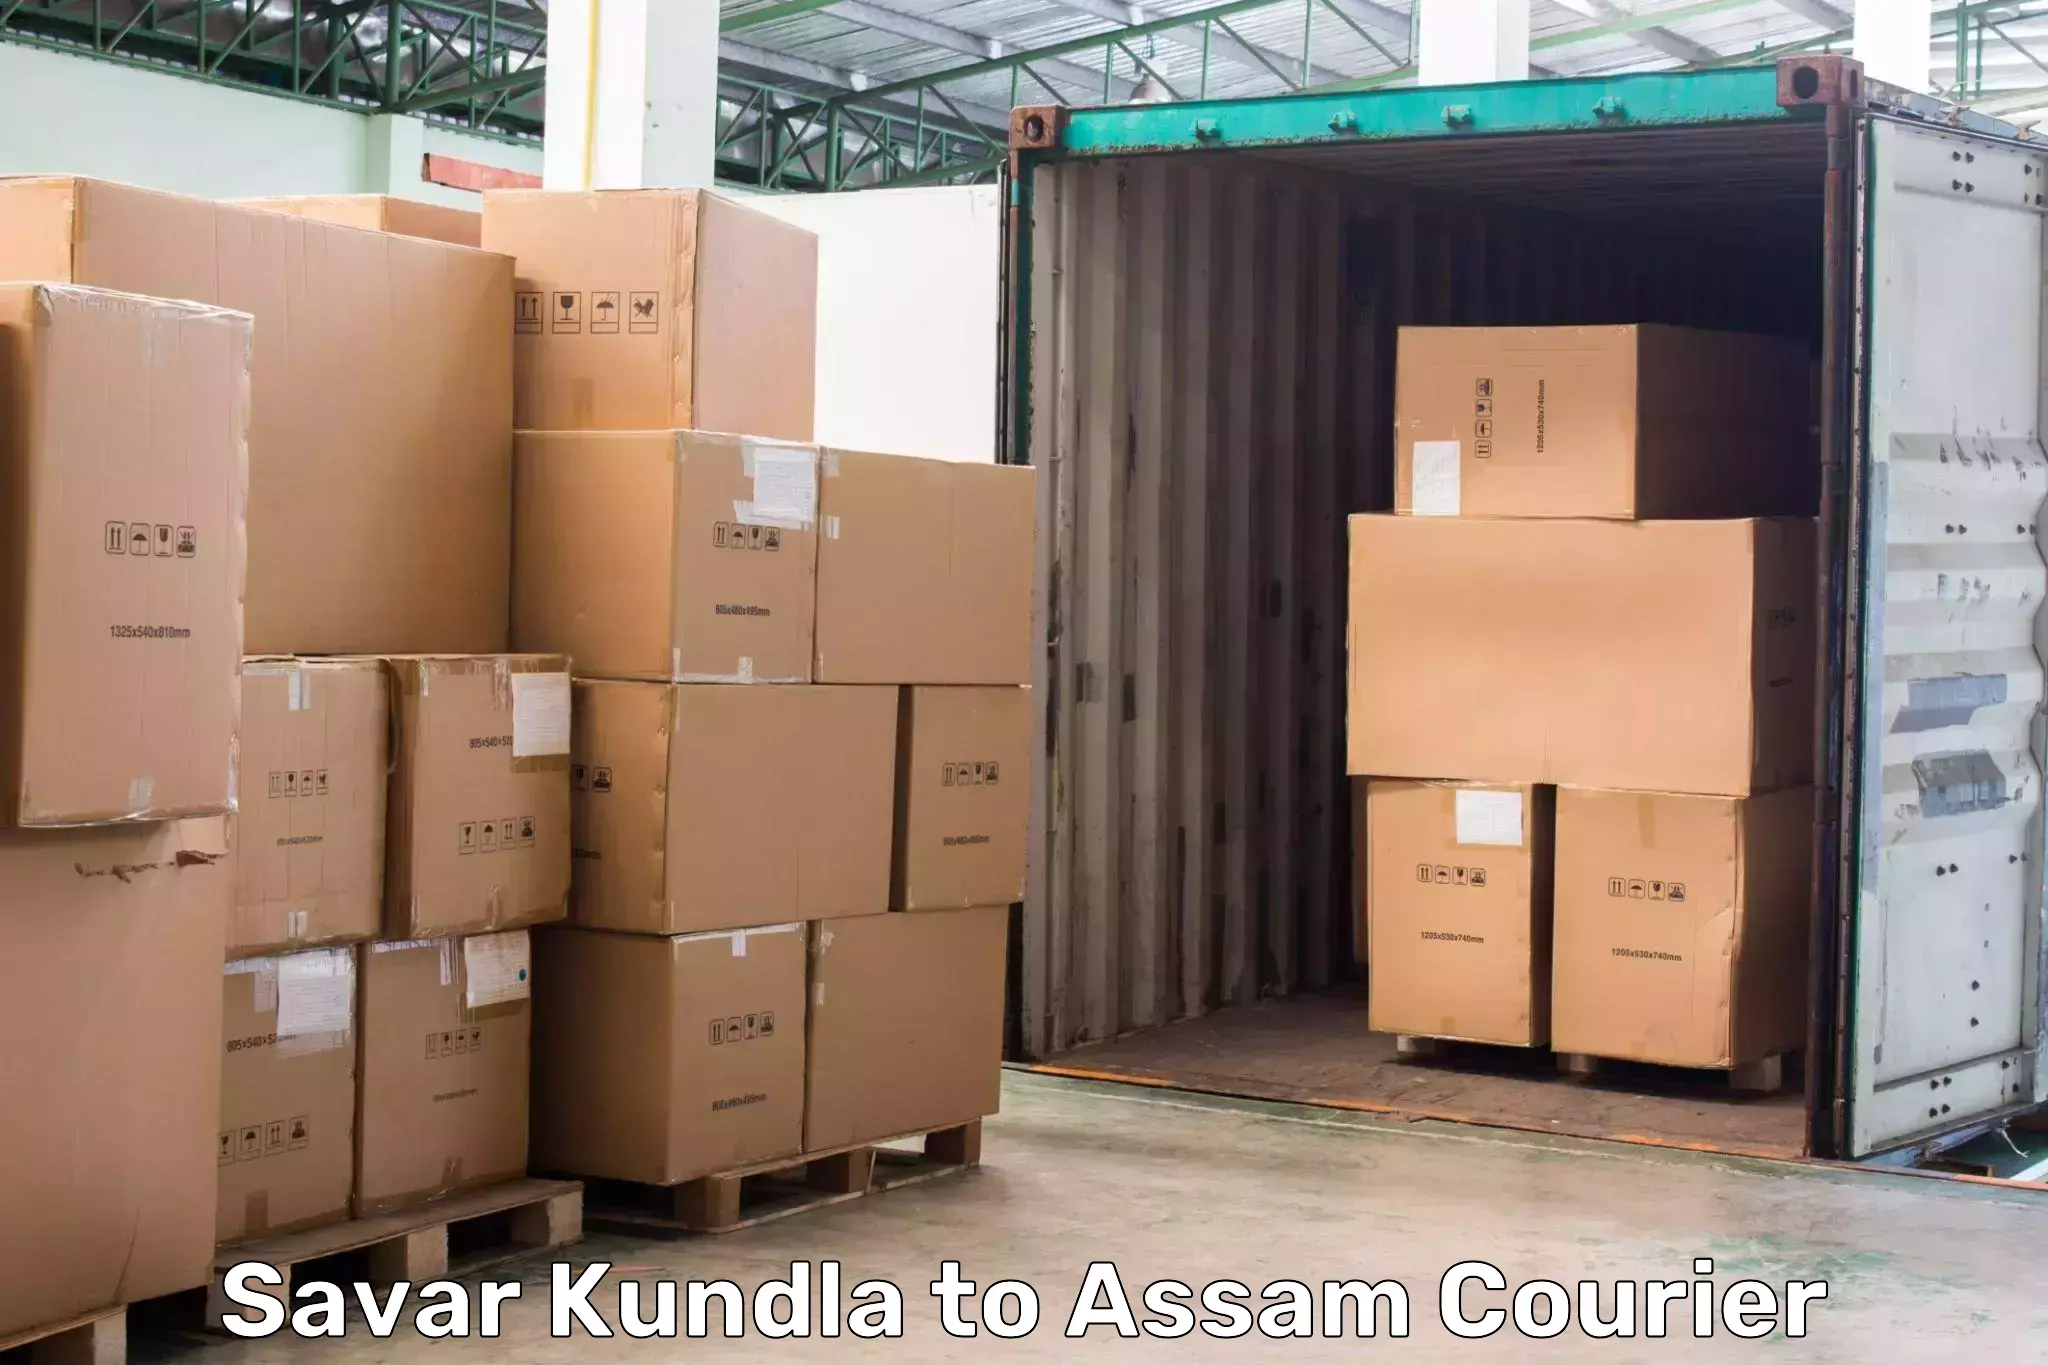 Courier service booking Savar Kundla to Assam